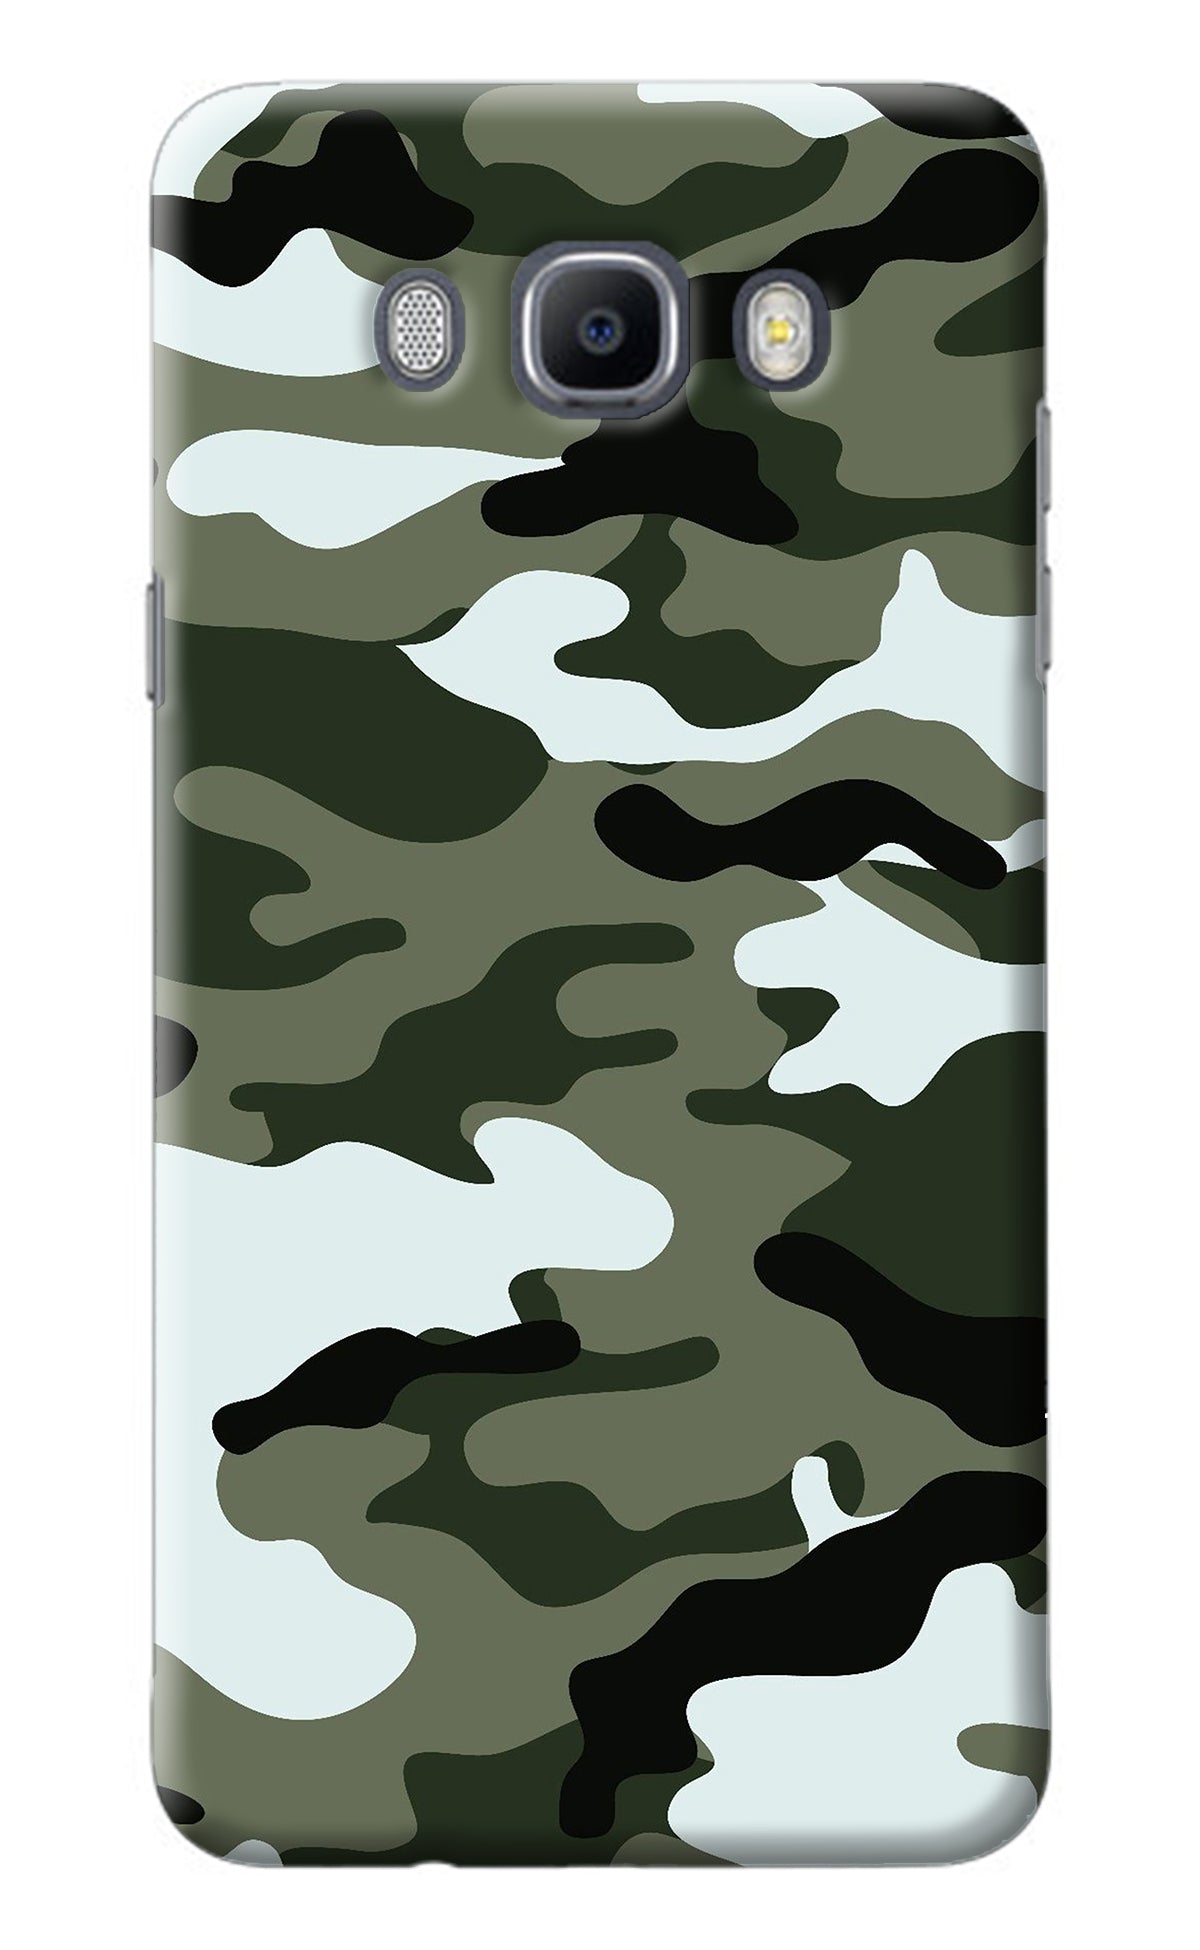 Camouflage Samsung J7 2016 Back Cover